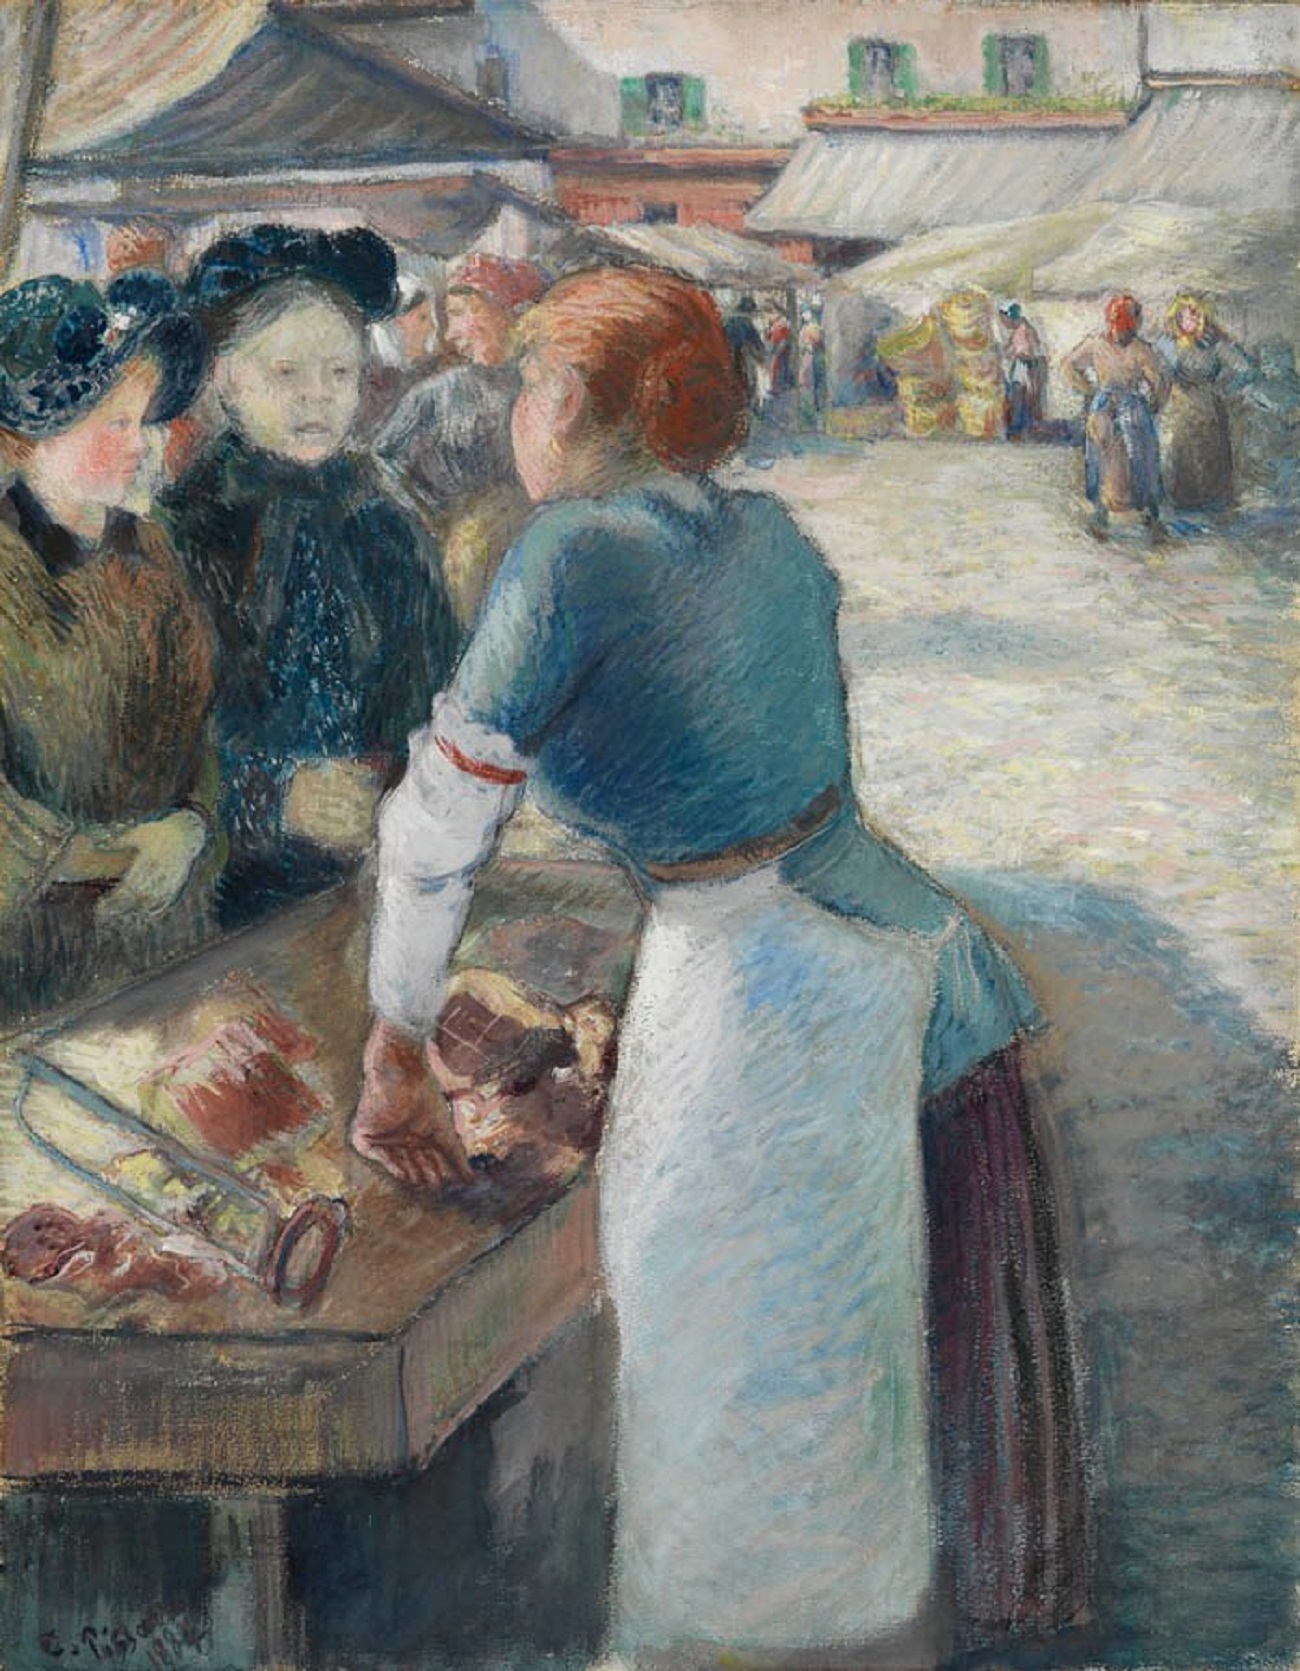 camille pissarro, the market stall, 1884